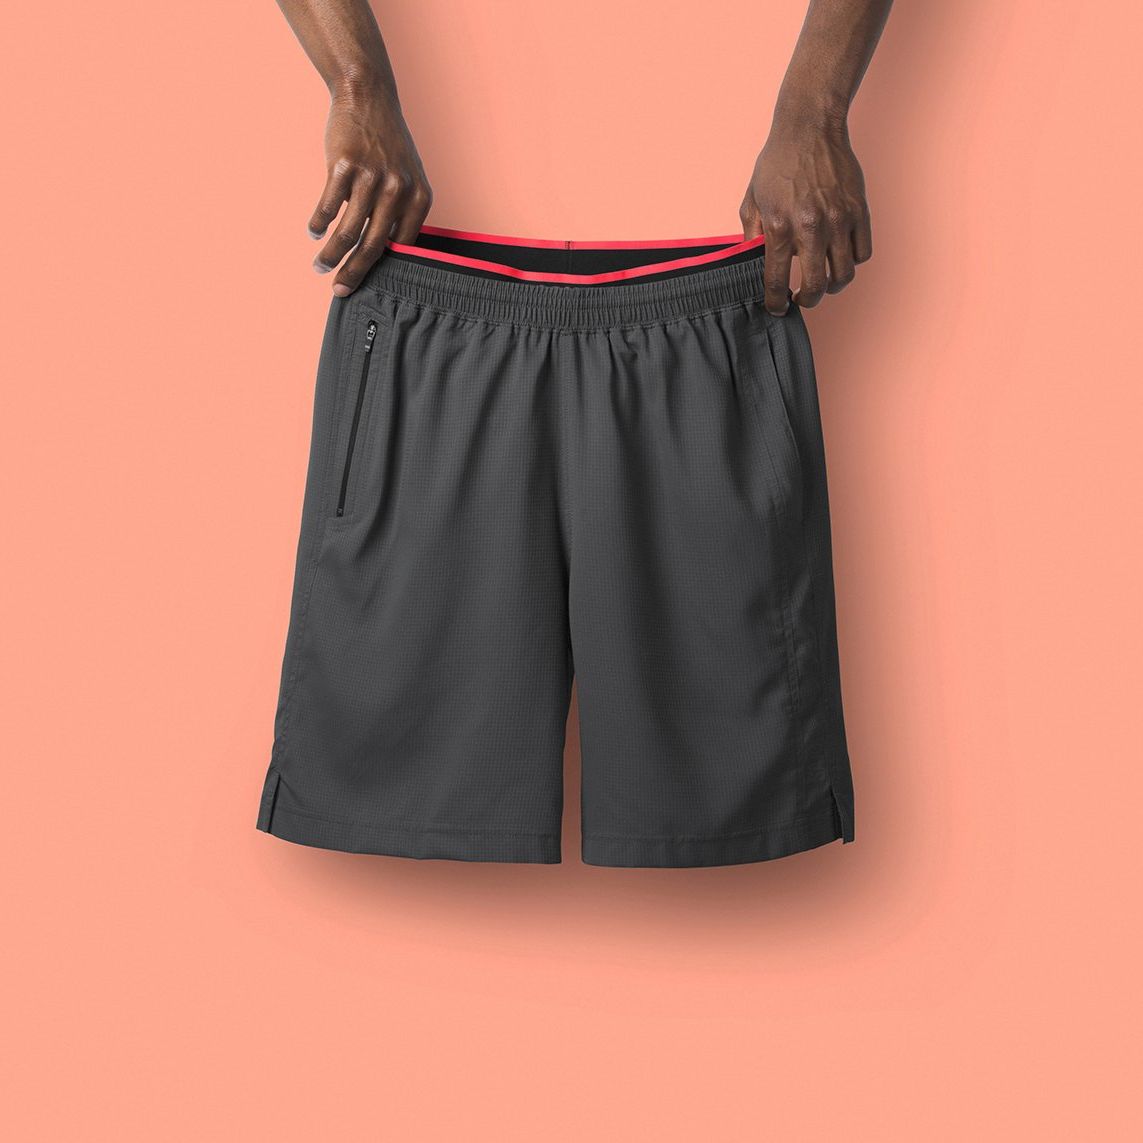 Gym Shorts training shorts for men Sanguine Crossfit Shorts workout shorts